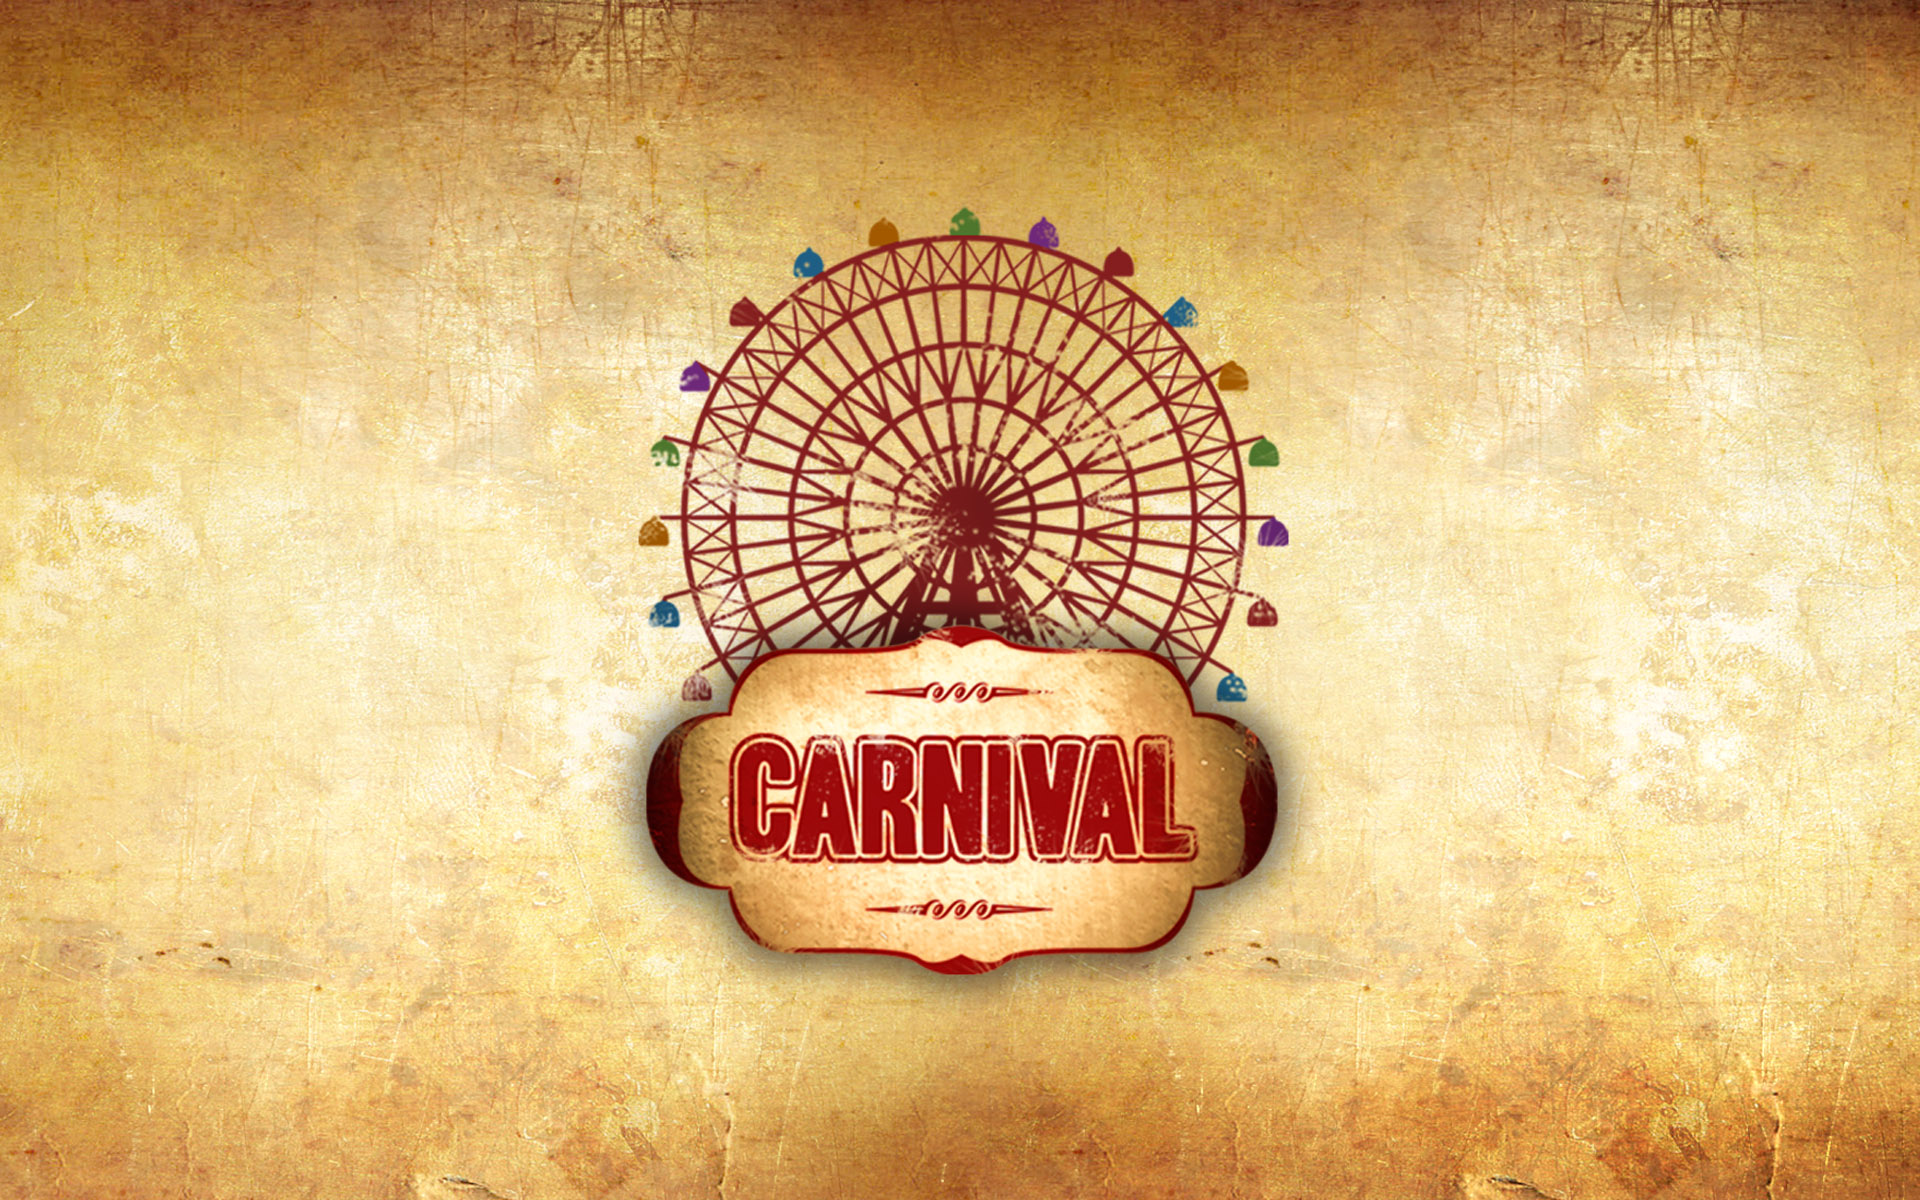 Carnival Background Images  Free Download on Freepik